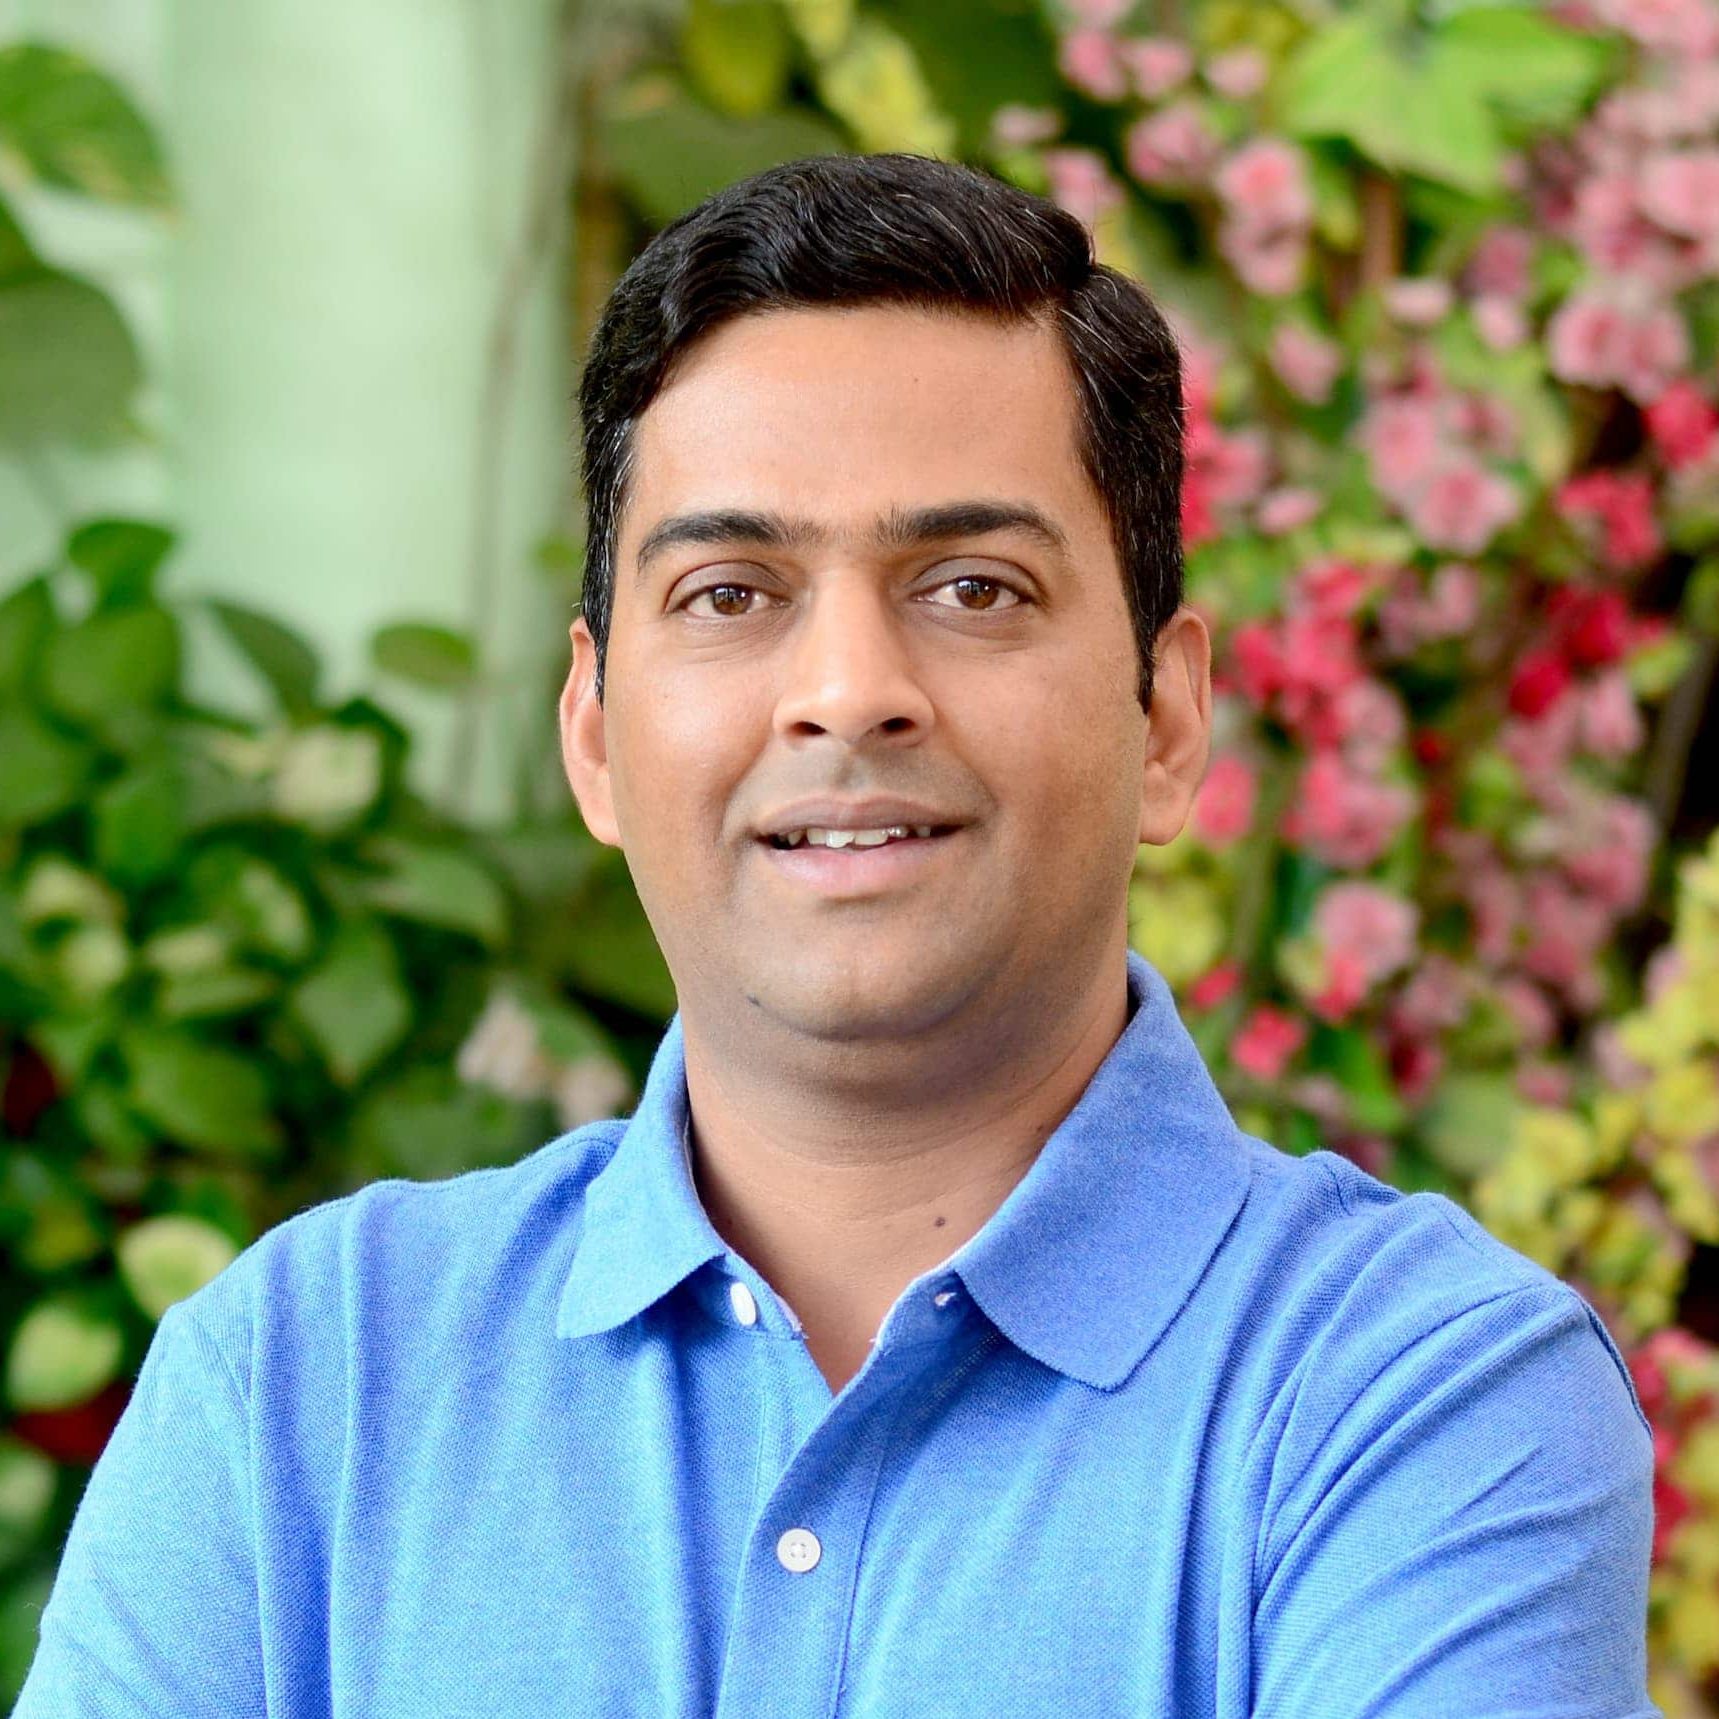 A headshot of Prateek, wearing a blue shirt.